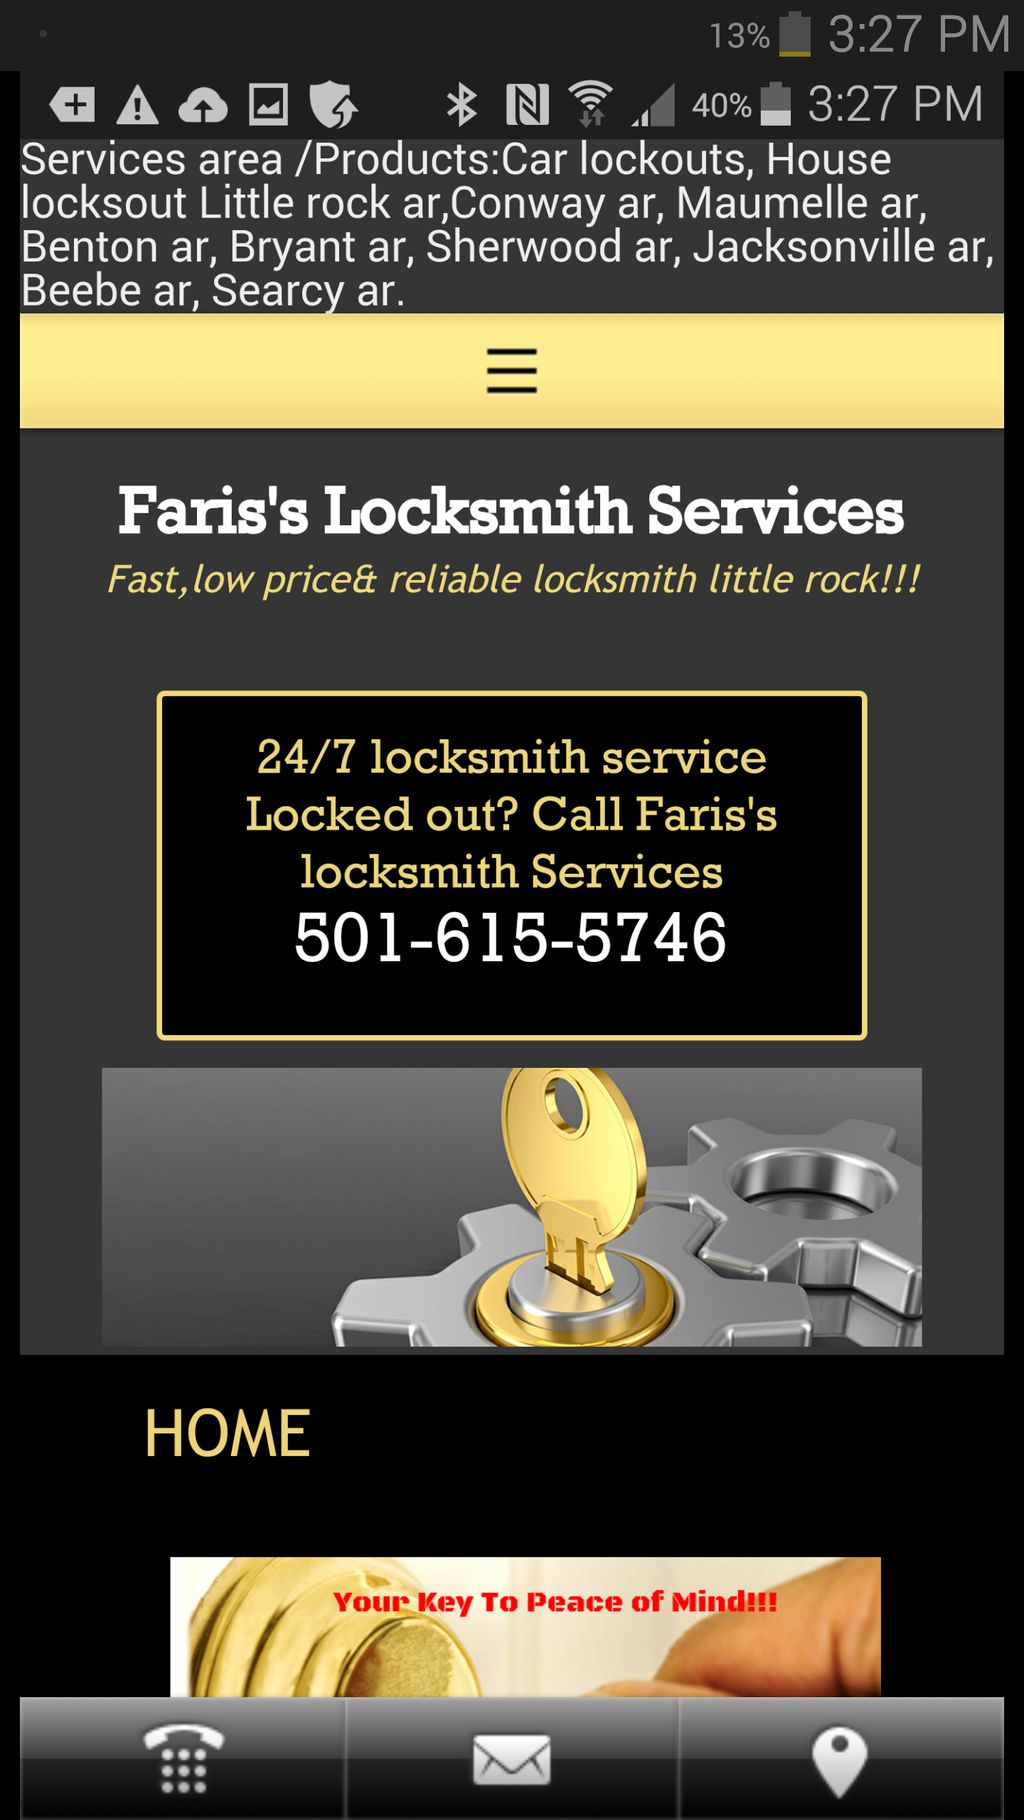 Faris's Locksmith Services